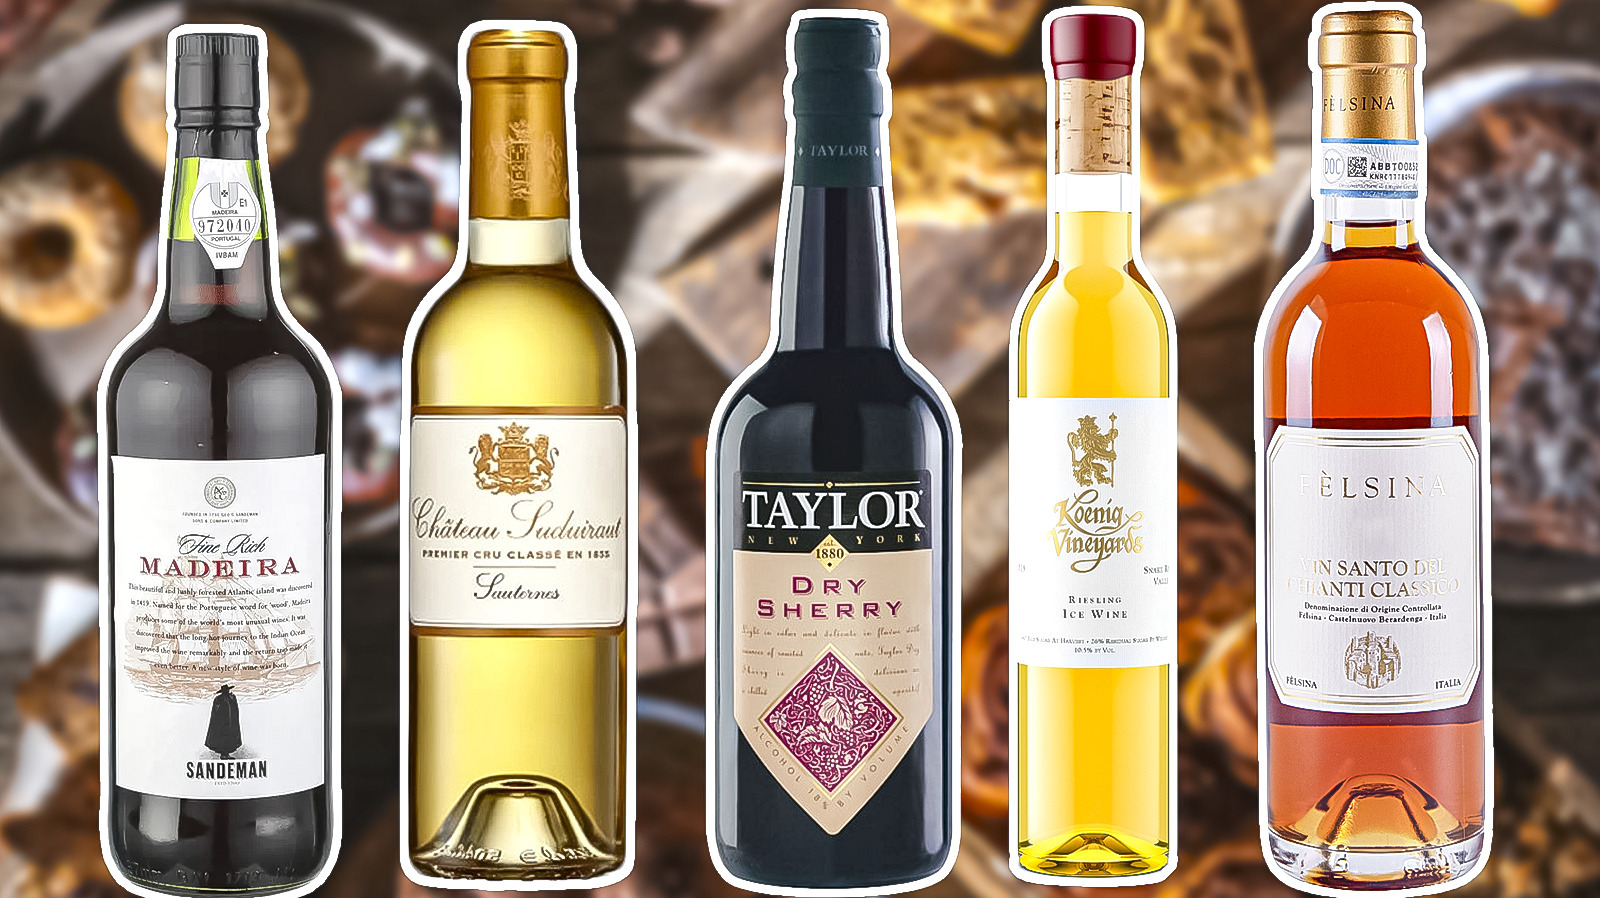 Roscato Sweet Red Wine: 3 Styles, Taste, Best Bottles (2023)